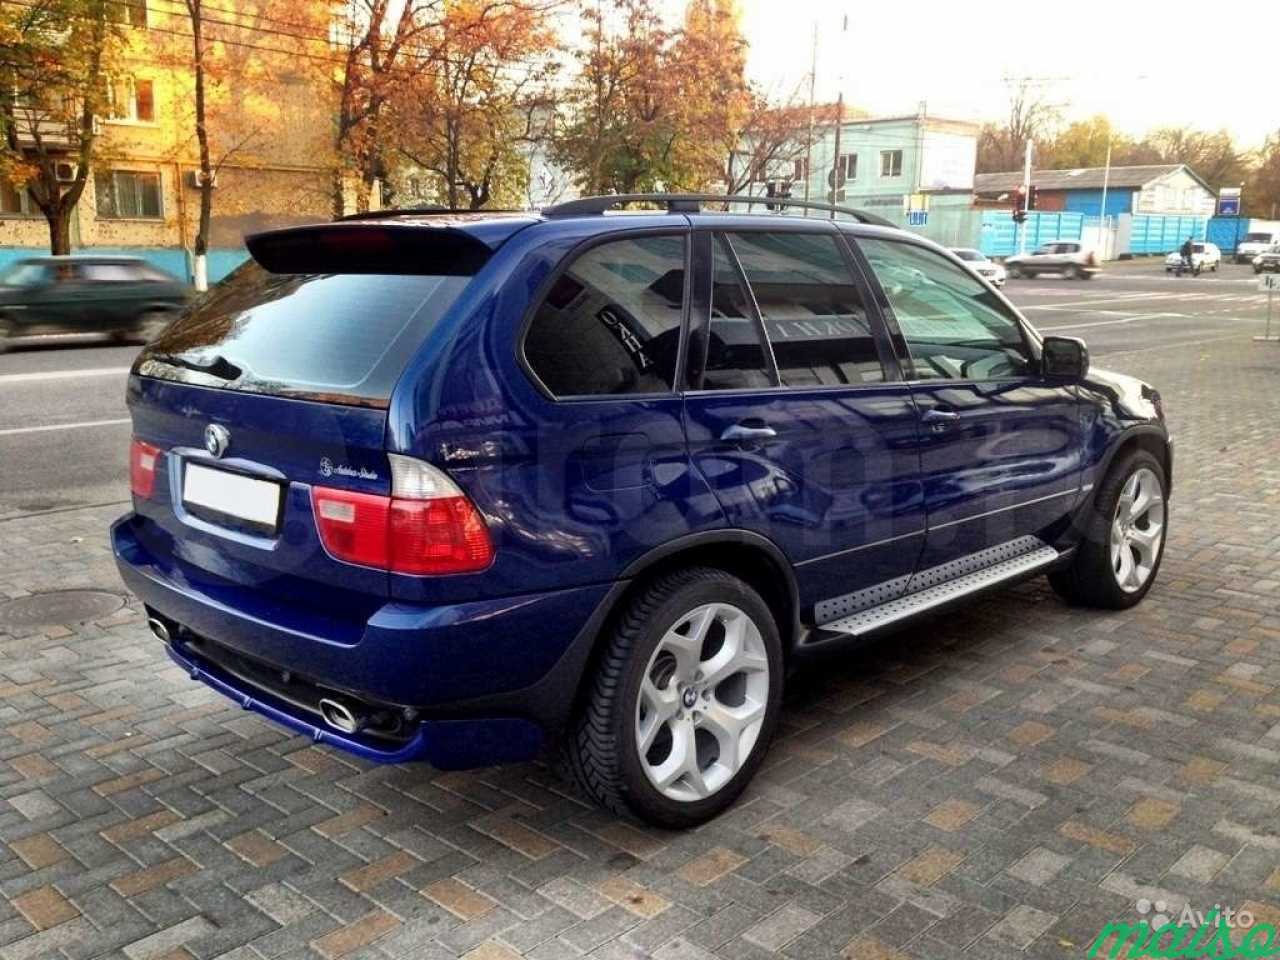 Обвес на BMW X5E53 в Санкт-Петербурге. Фото 2